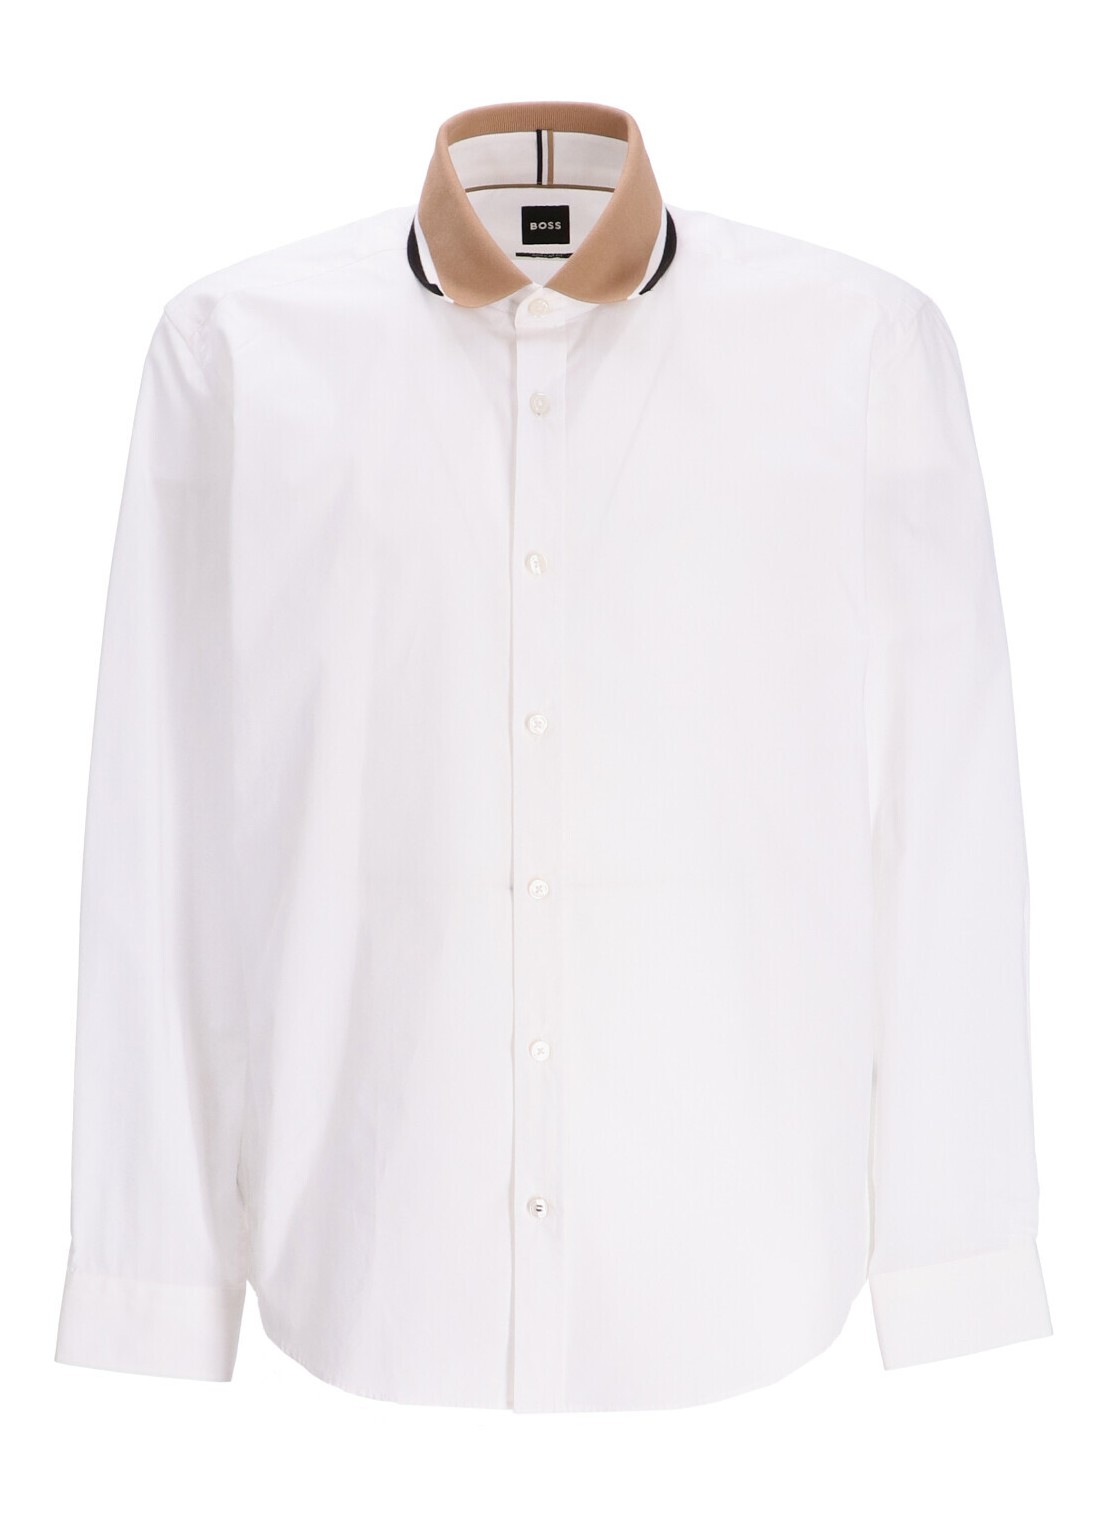 Camiseria boss shirt man s-liam-polo 50509176 100 talla blanco
 